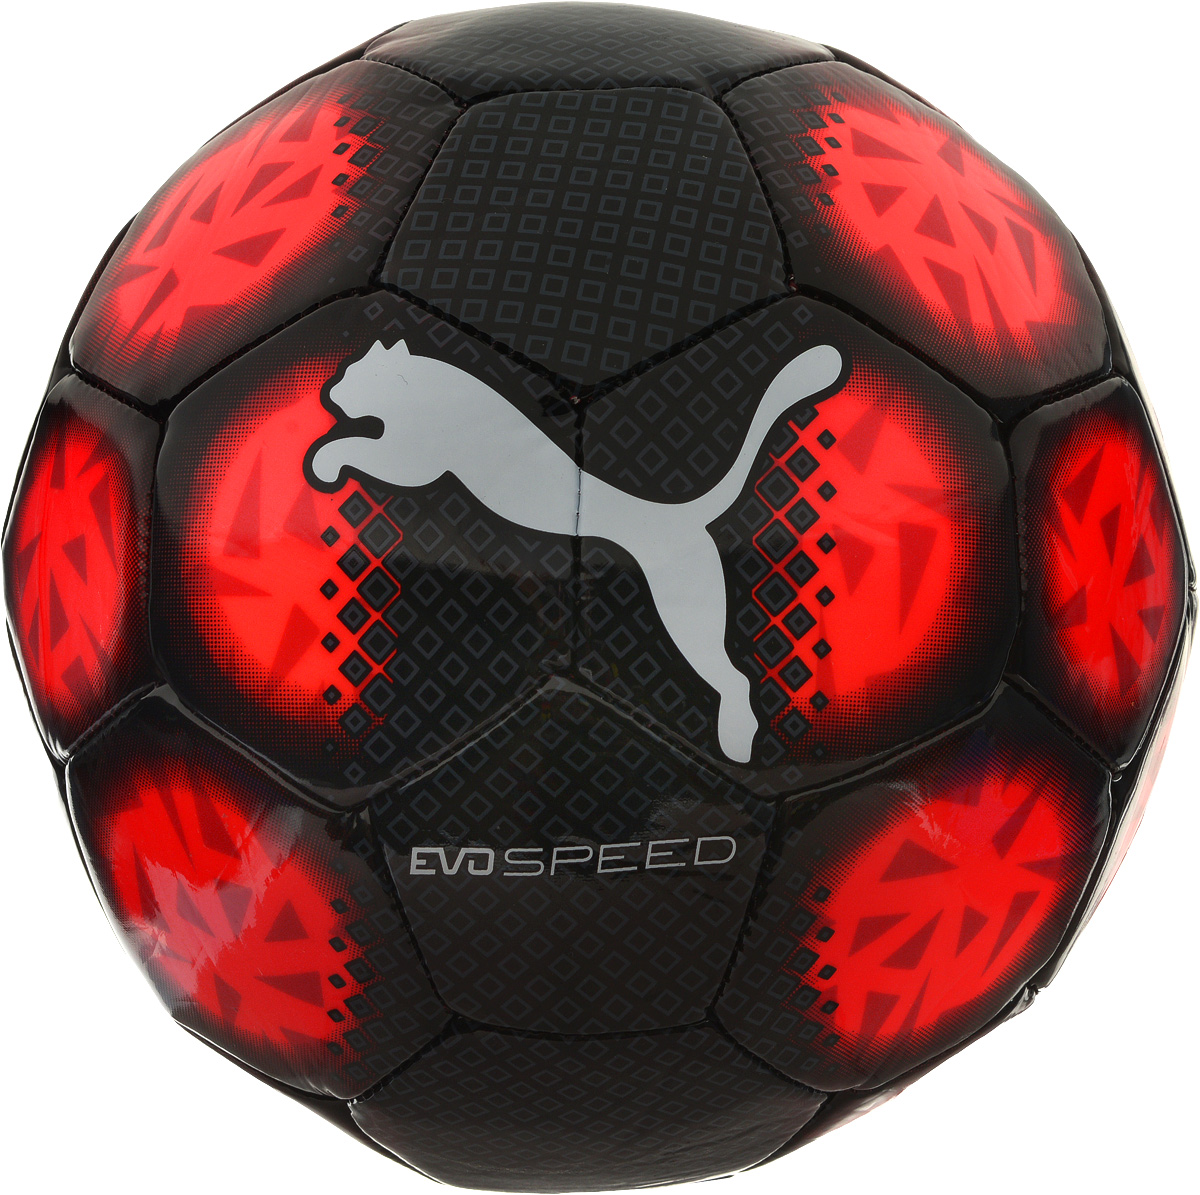 Самые крутые мячи. Мяч Puma EVOSPEED. Puma EVOSPEED 5 мяч футбольный. Football Puma EVOSPEED Ball.